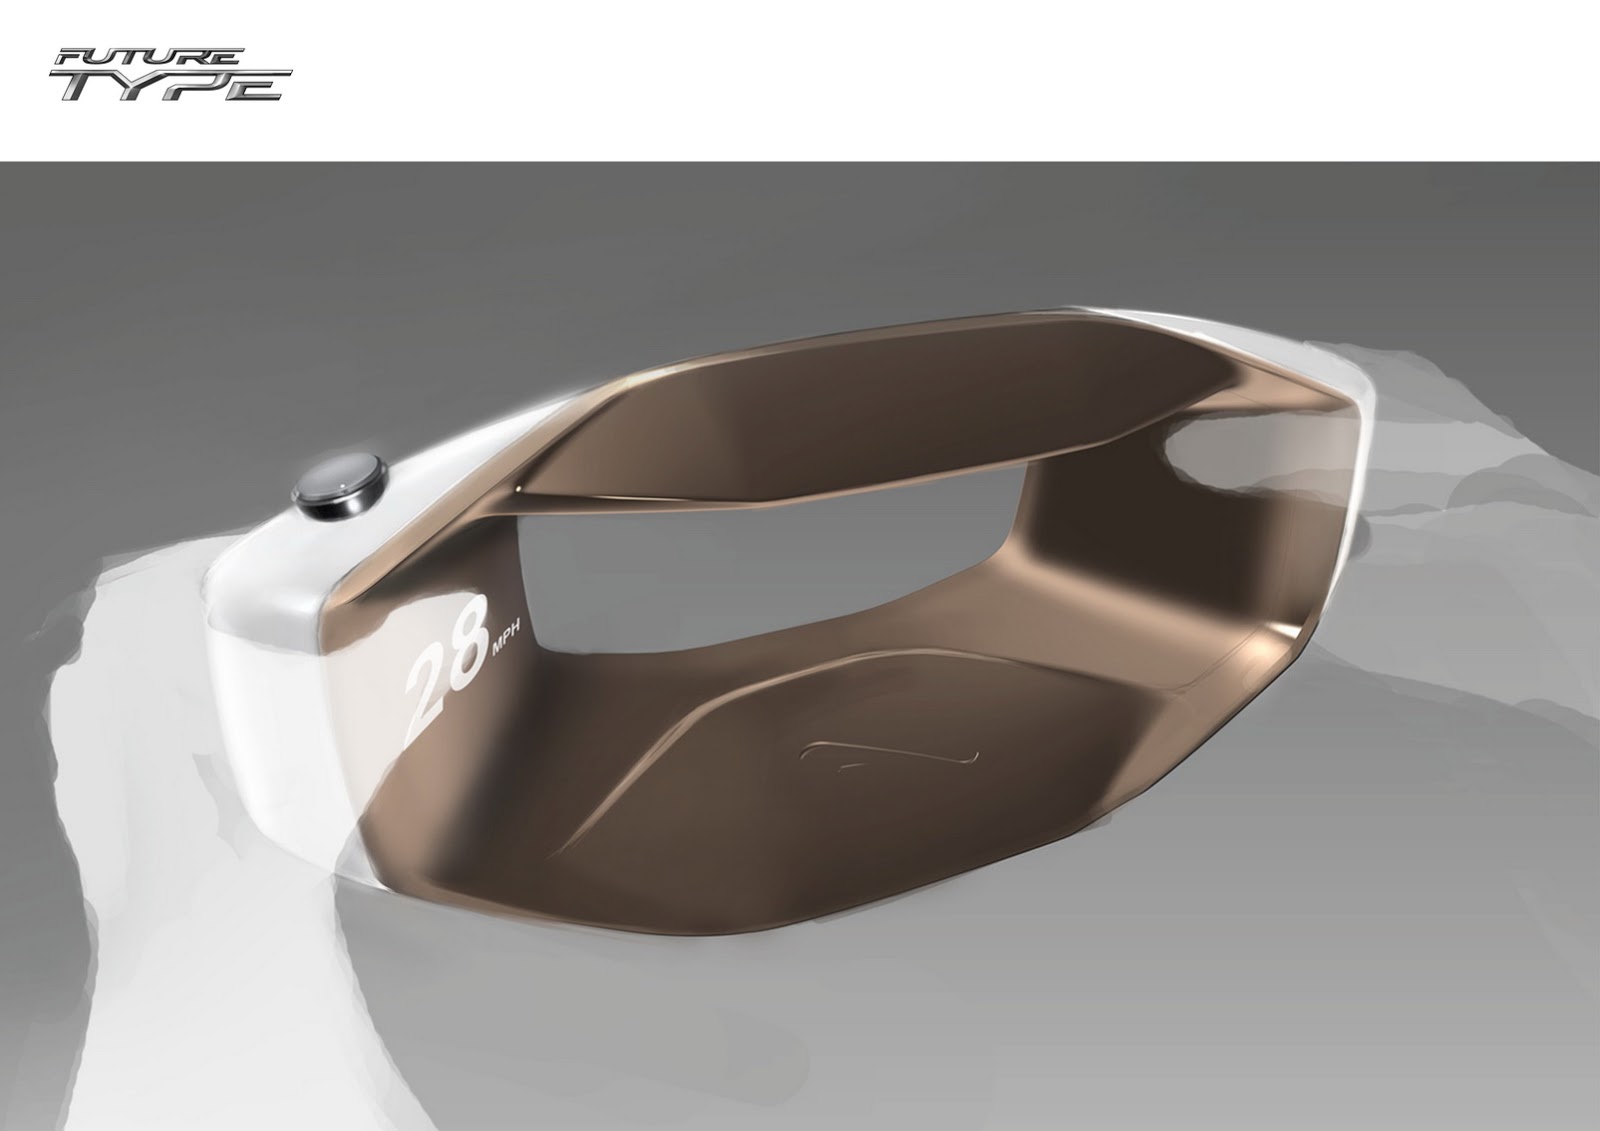 Jaguar Future-Type Concept, 2017 - Design Sketch